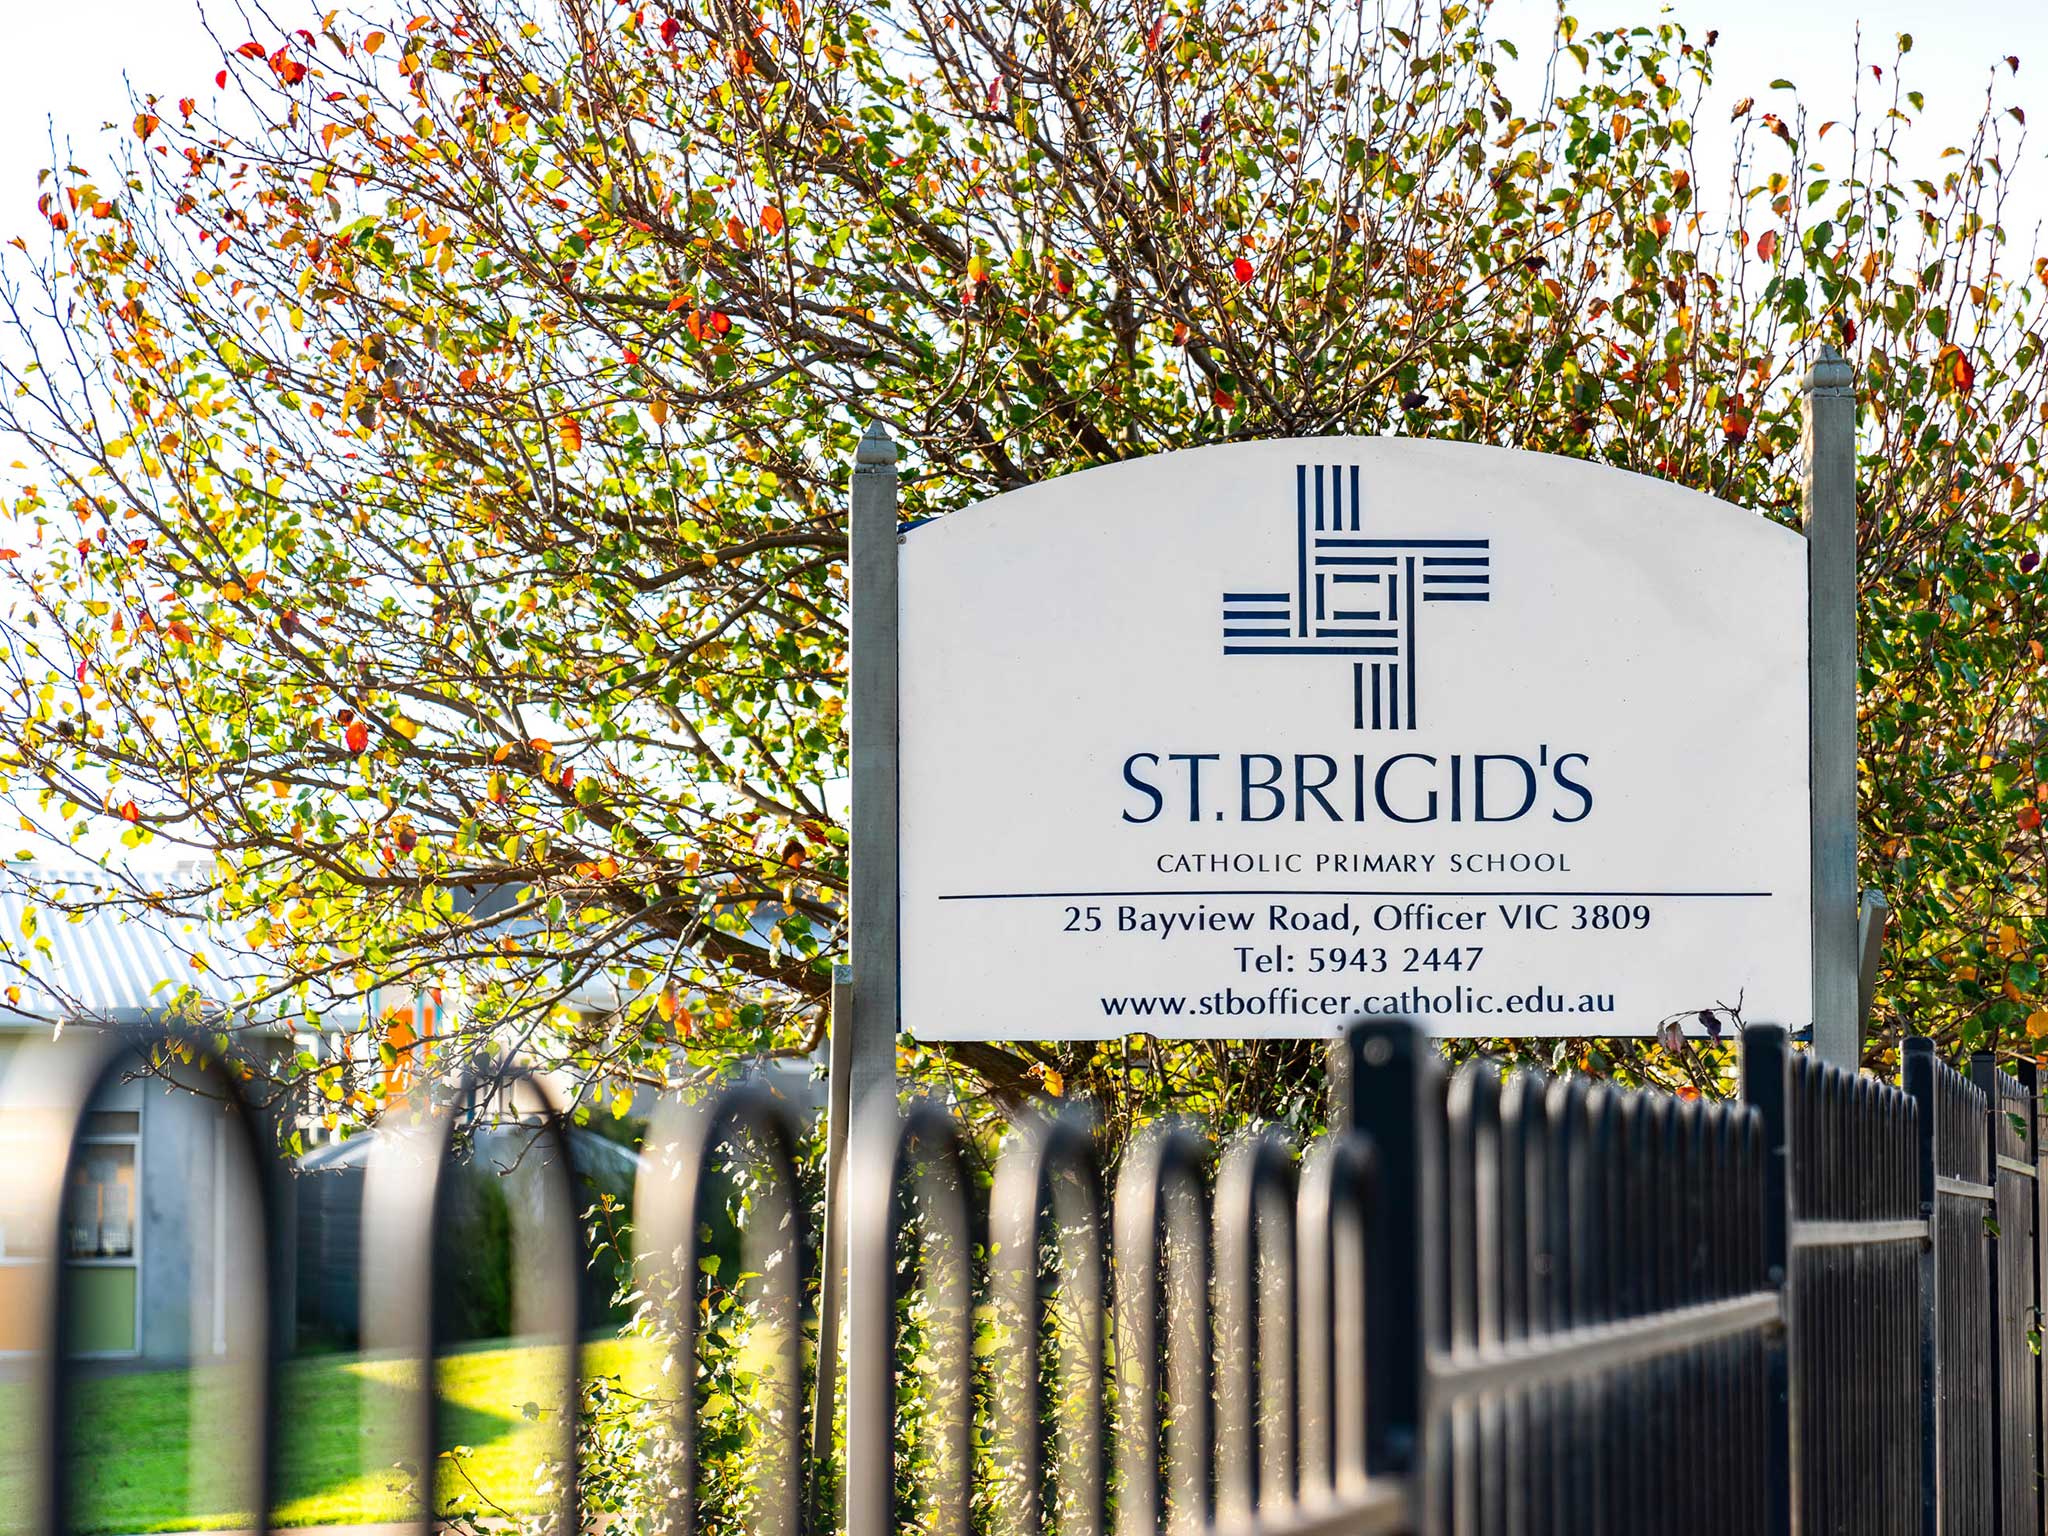 St Brigid’s Catholic Primary School